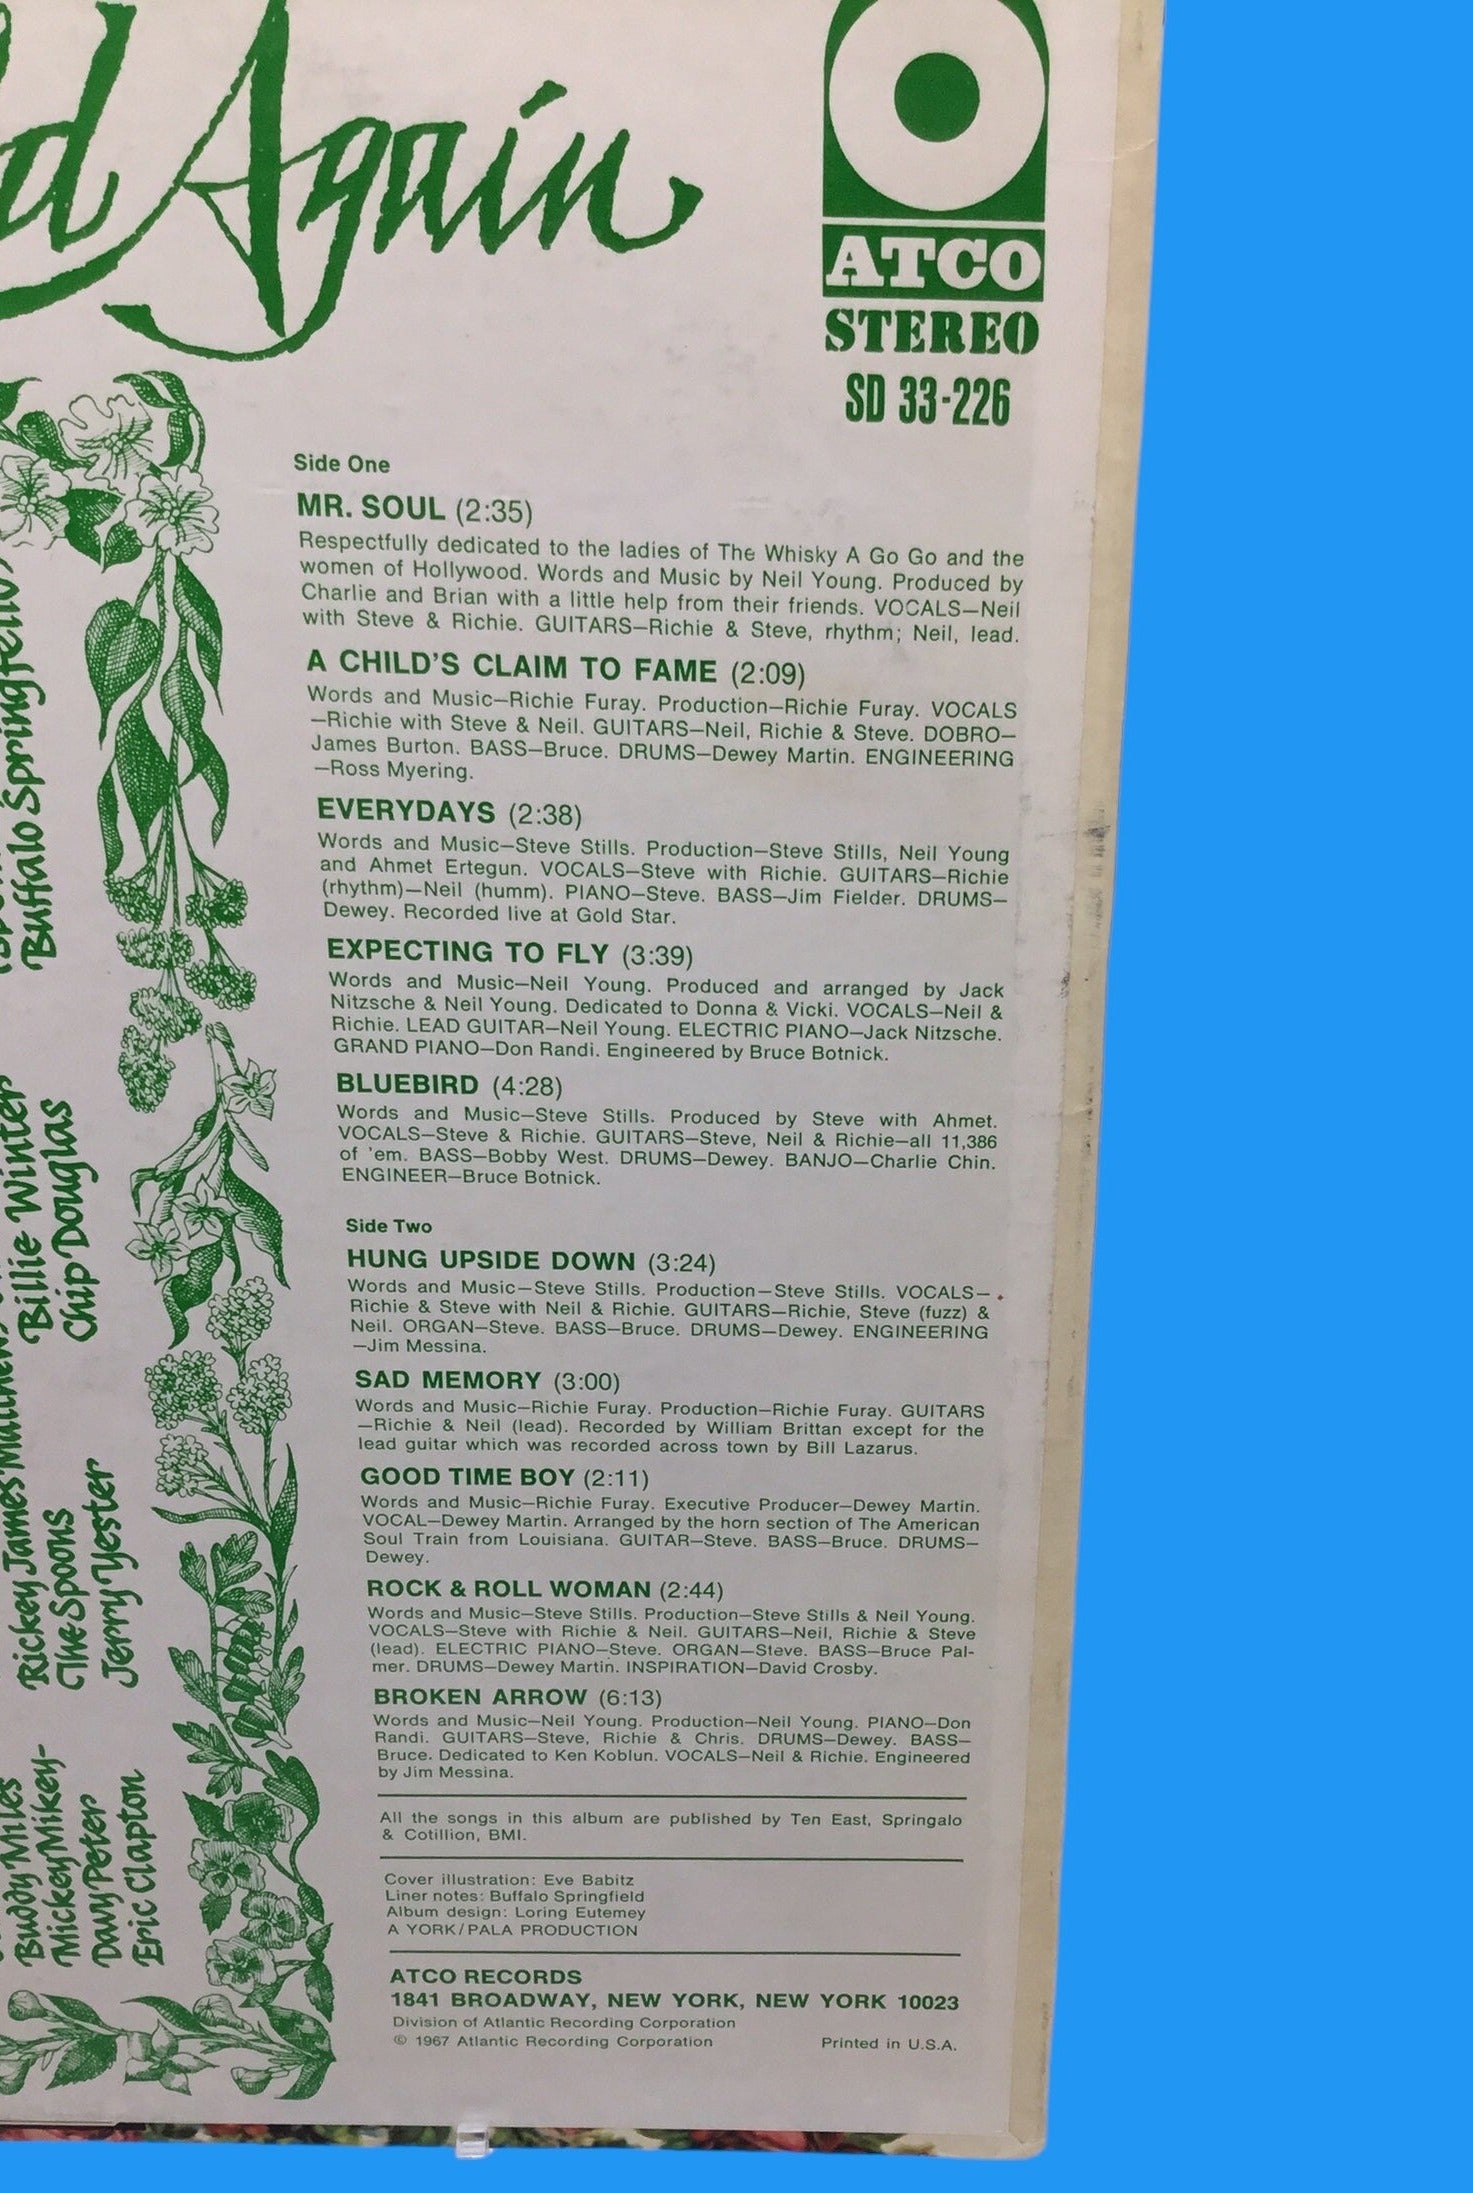 BUFFALO SPRINGFIELD AGAIN LP (1967) ORIG 1ST Stereo ATCO 33-226 TRI-TONE Label